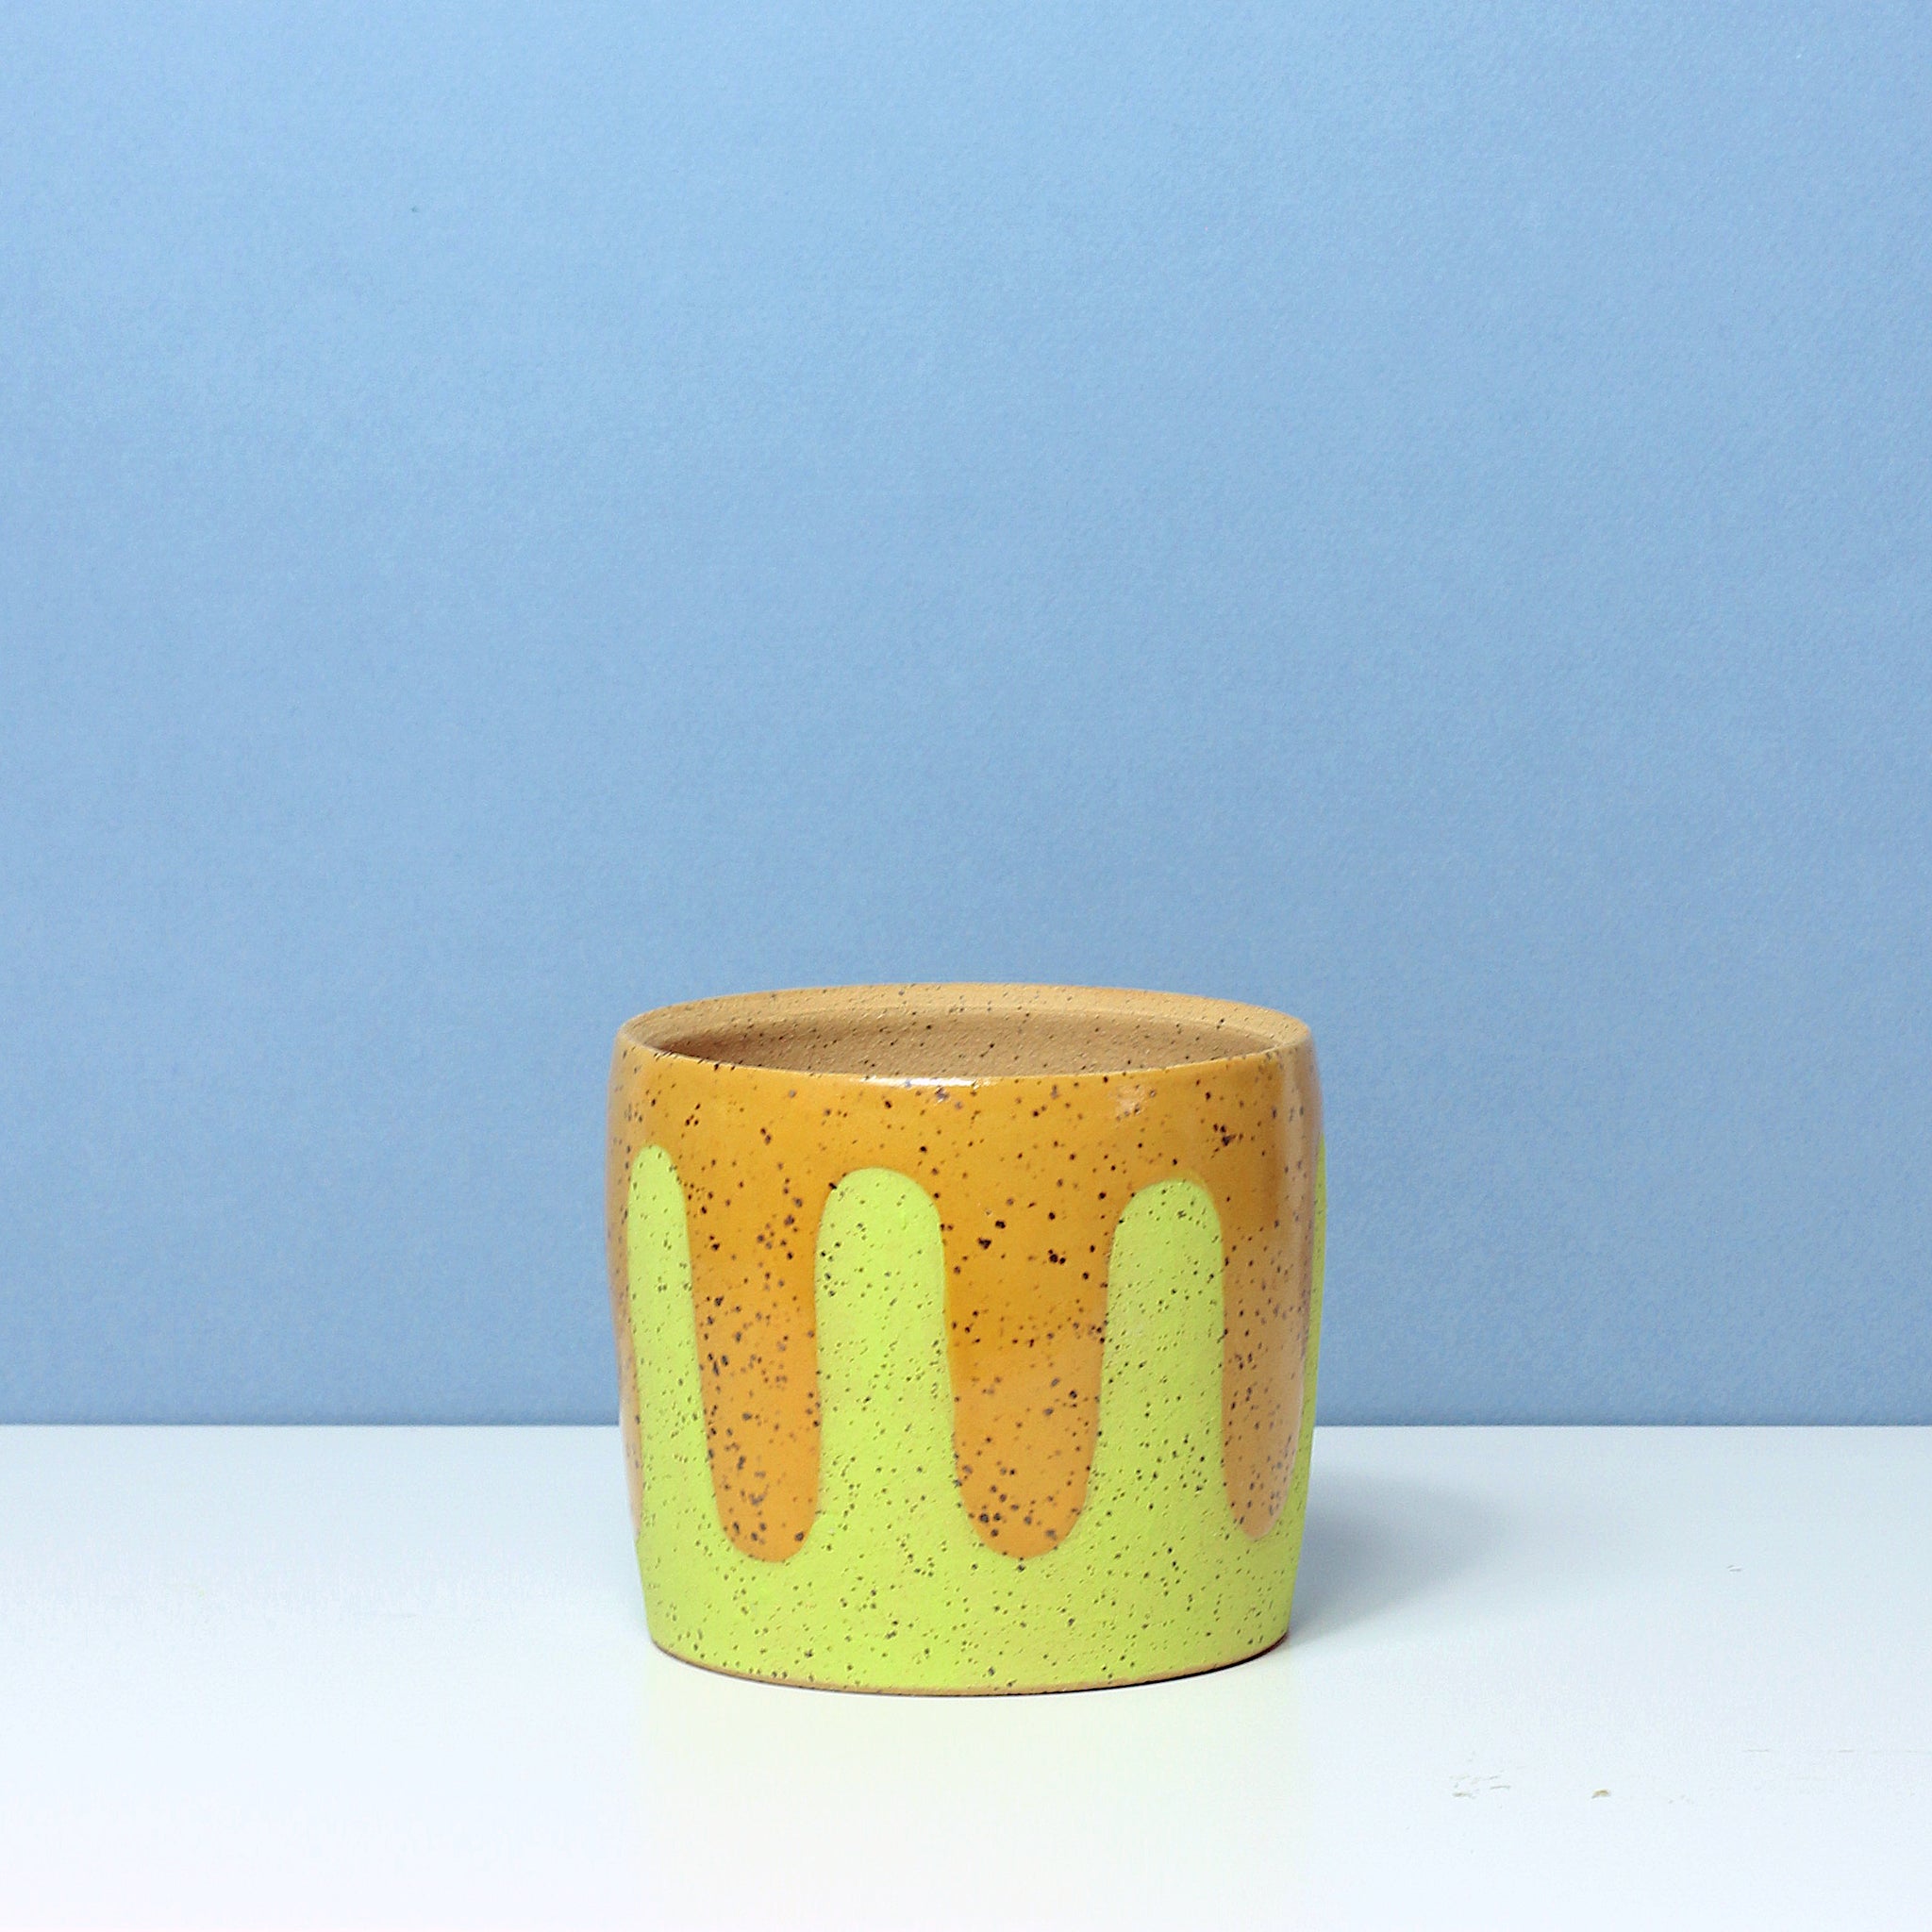 Glazed Stoneware Pot with Slime Pattern